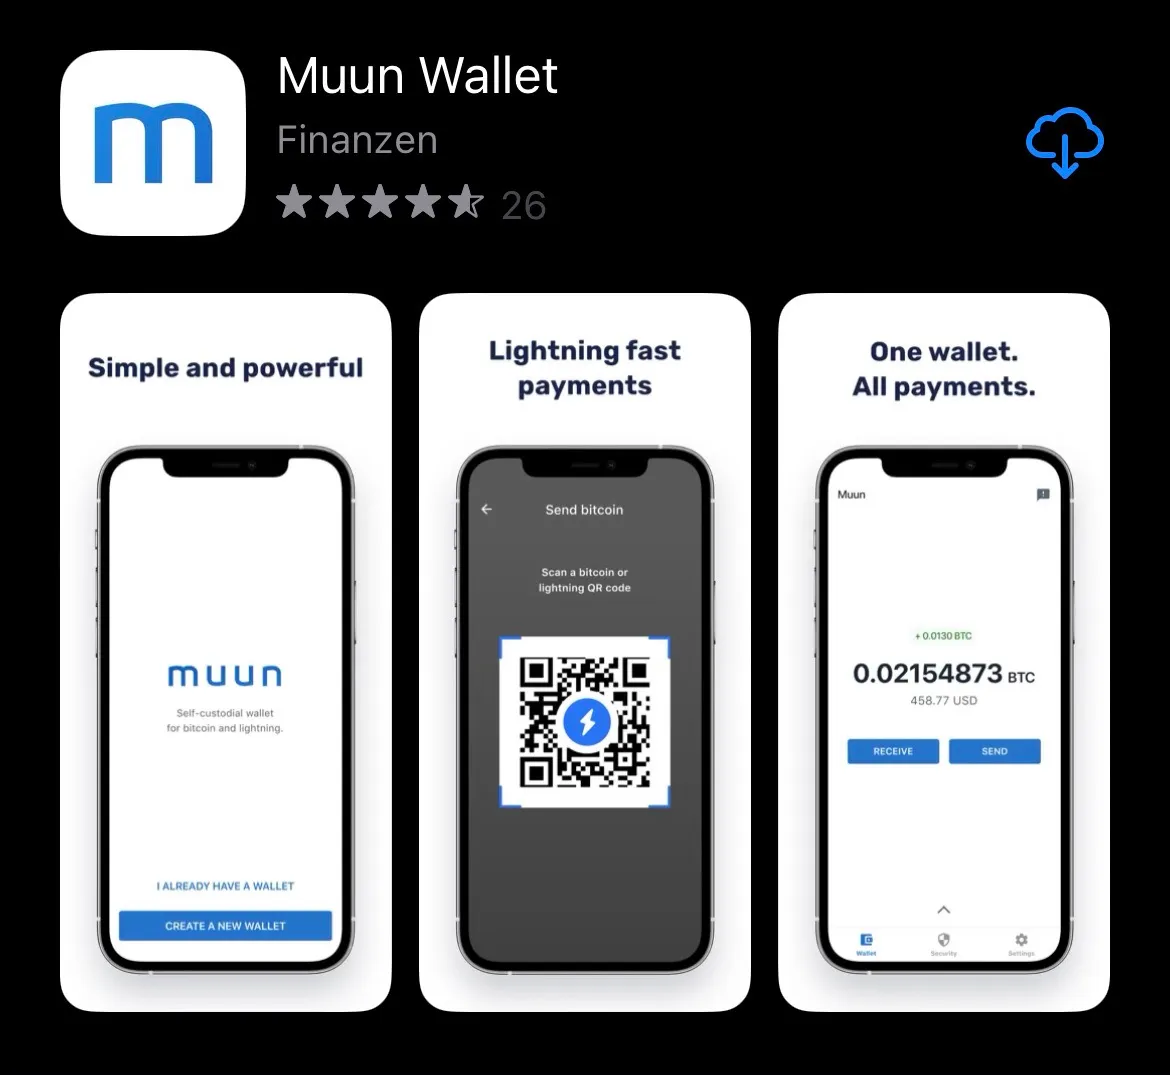 Muun Wallet in the iOS Appstore